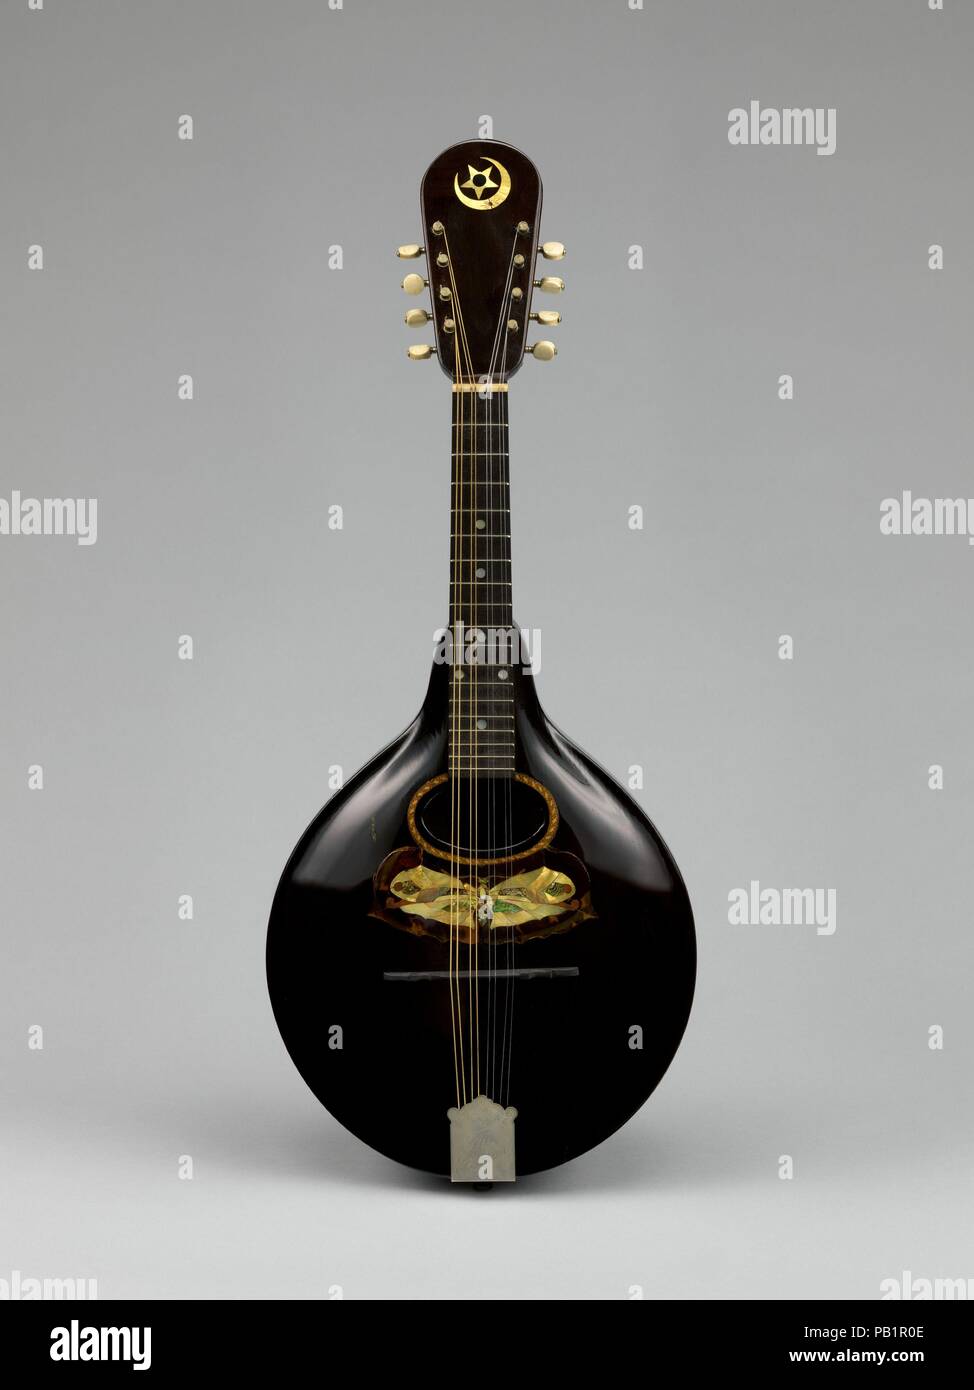 capital análisis Serrado La mandolina. Cultura: American. Dimensiones: 26 1/4 × 11 × 3 1/4 in. (66,7  × 27,9 × 8,3 cm). Maker: Orville Gibson (Americano, 1856-1918). Fecha:  1898. Orville Gibson es uno de los